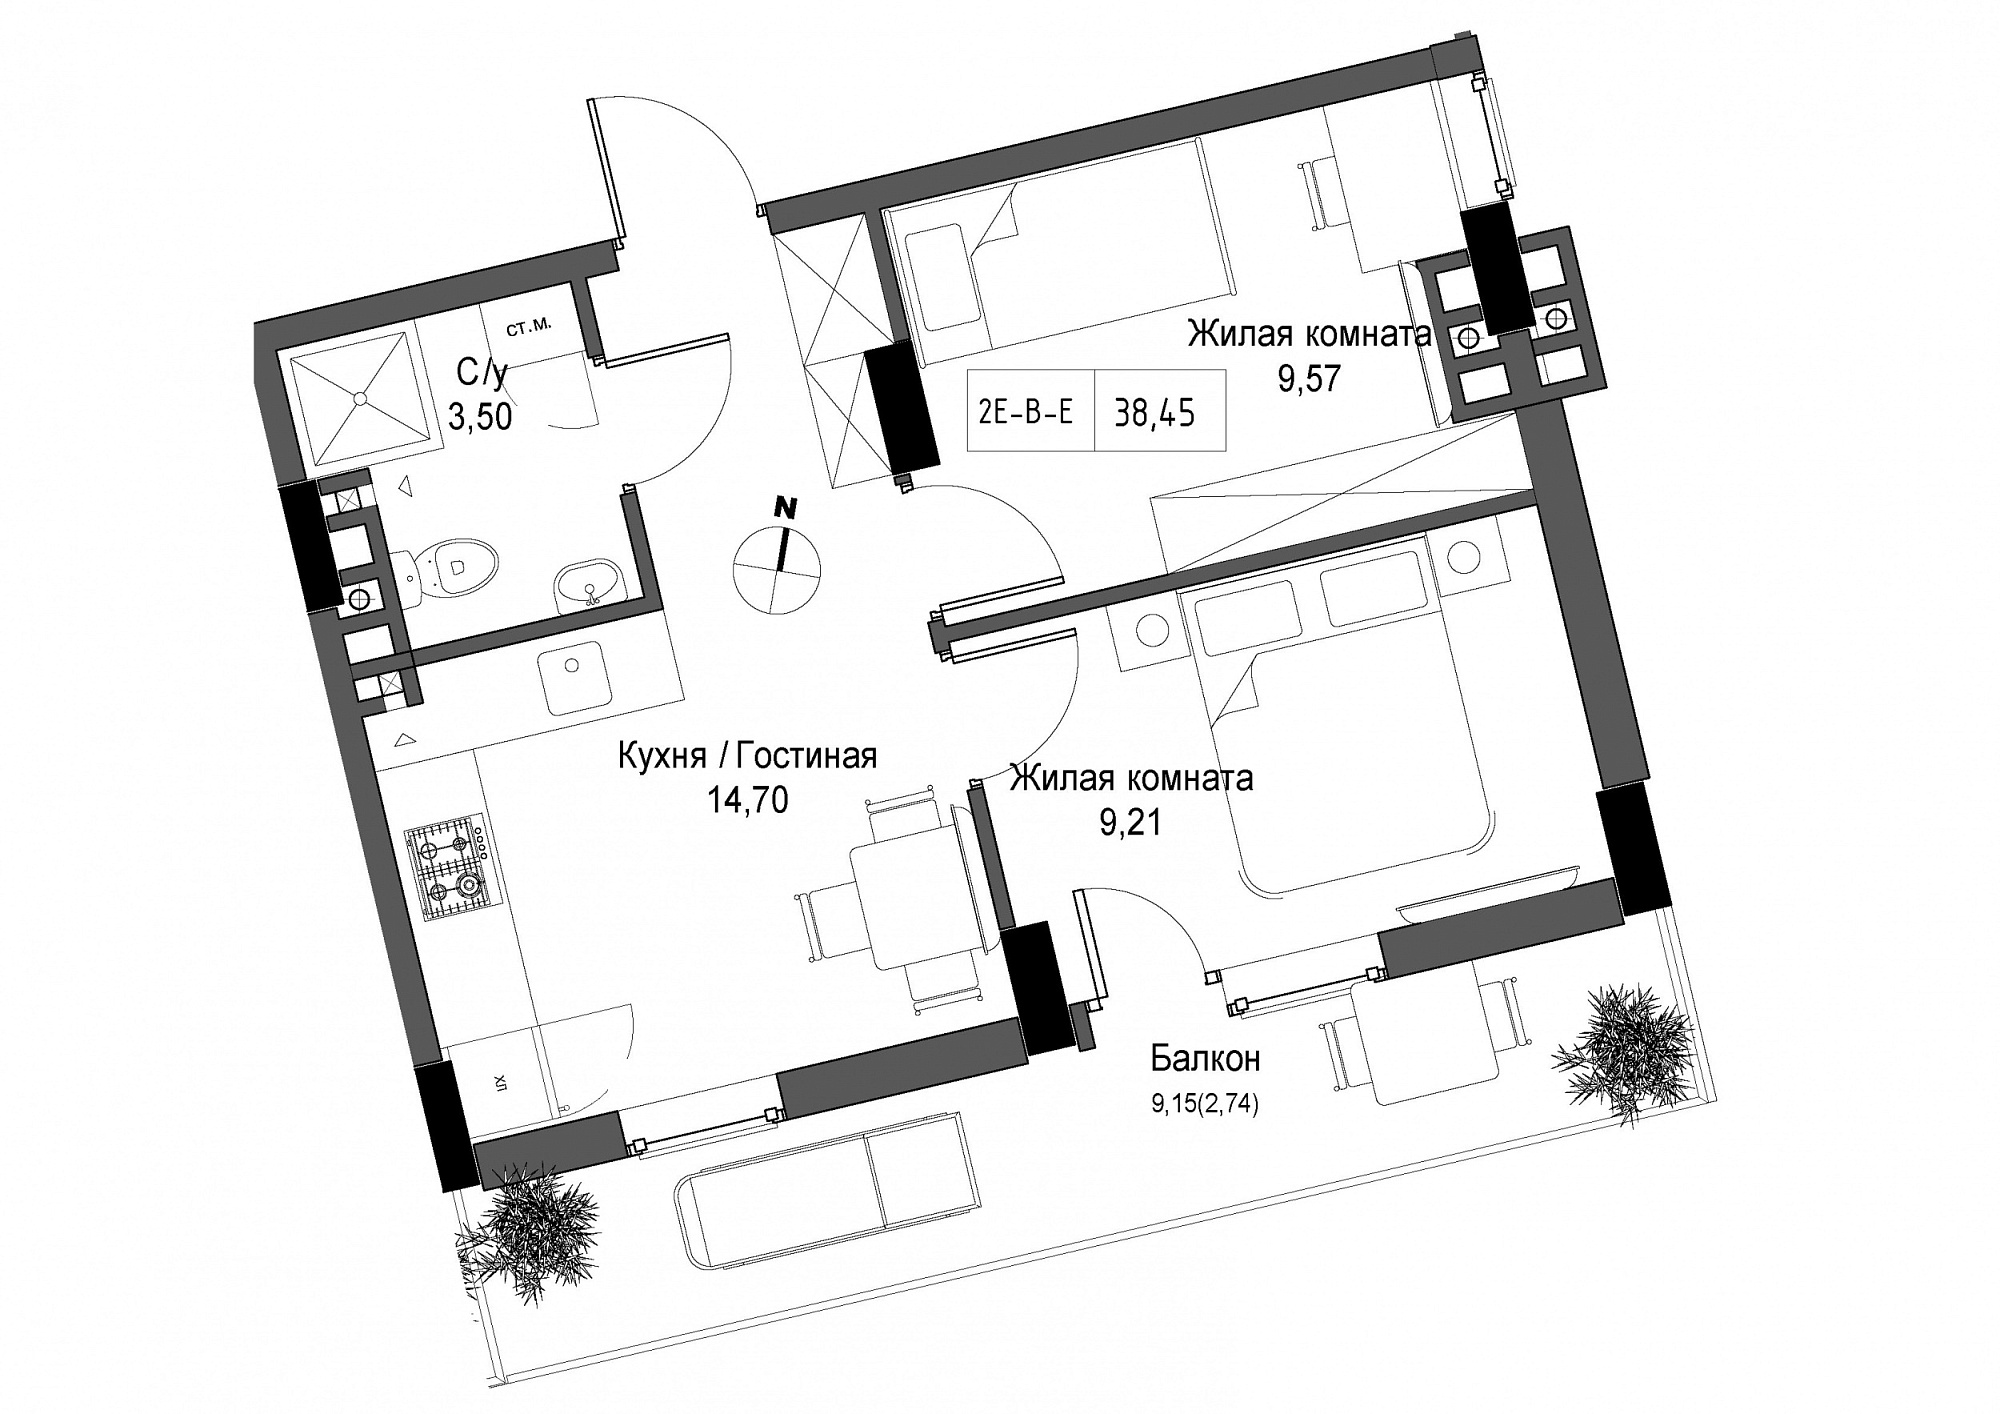 Планування 2-к квартира площею 38.45м2, UM-004-07/0011.